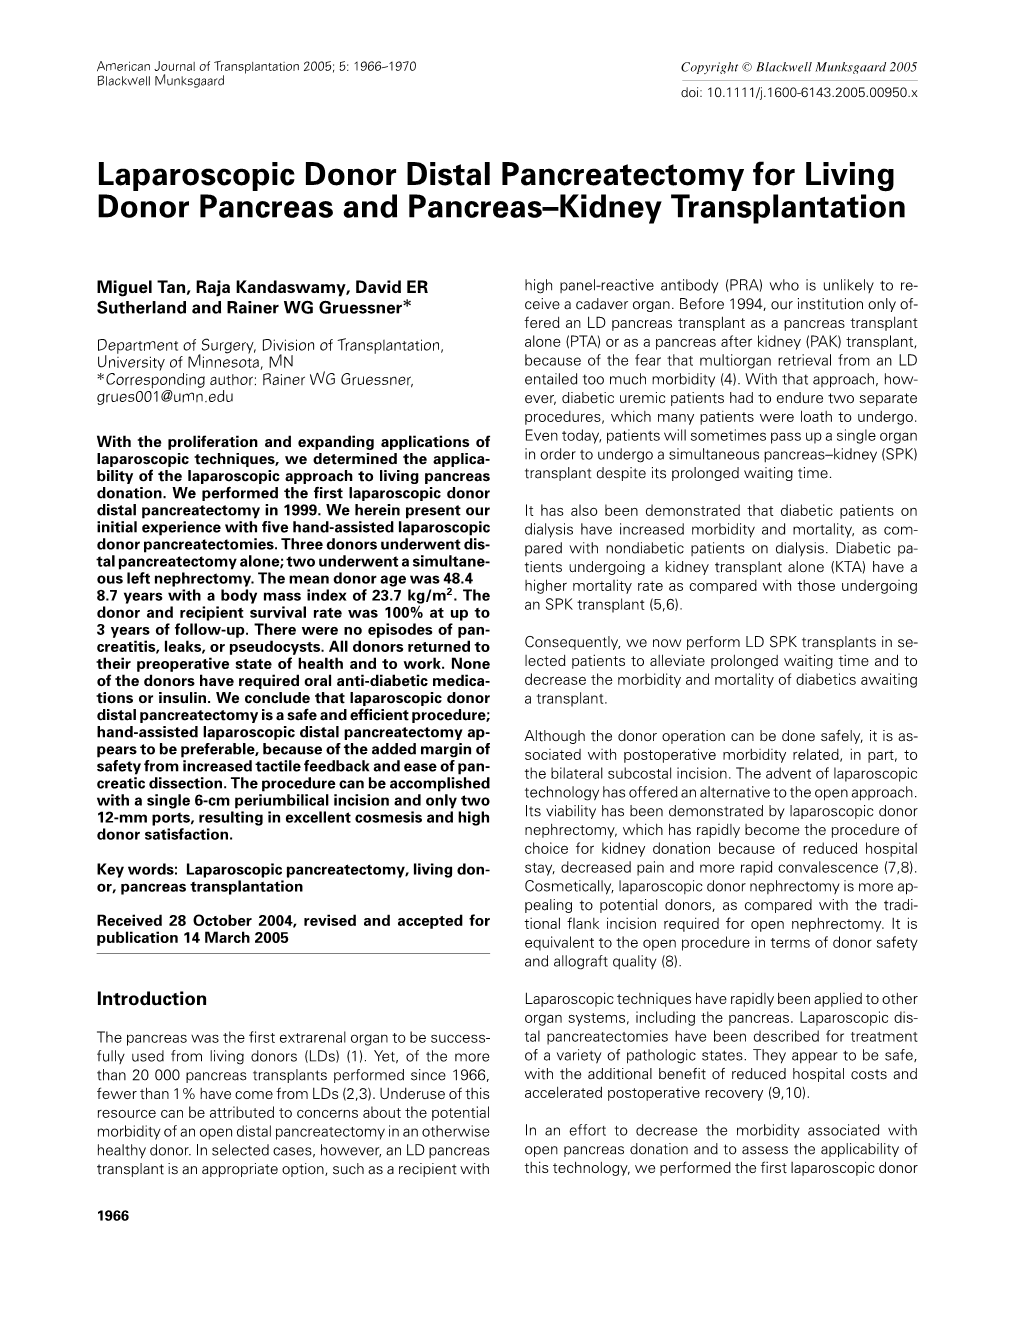 Laparoscopic Donor Distal Pancreatectomy for Living Donor Pancreas and Pancreas–Kidney Transplantation